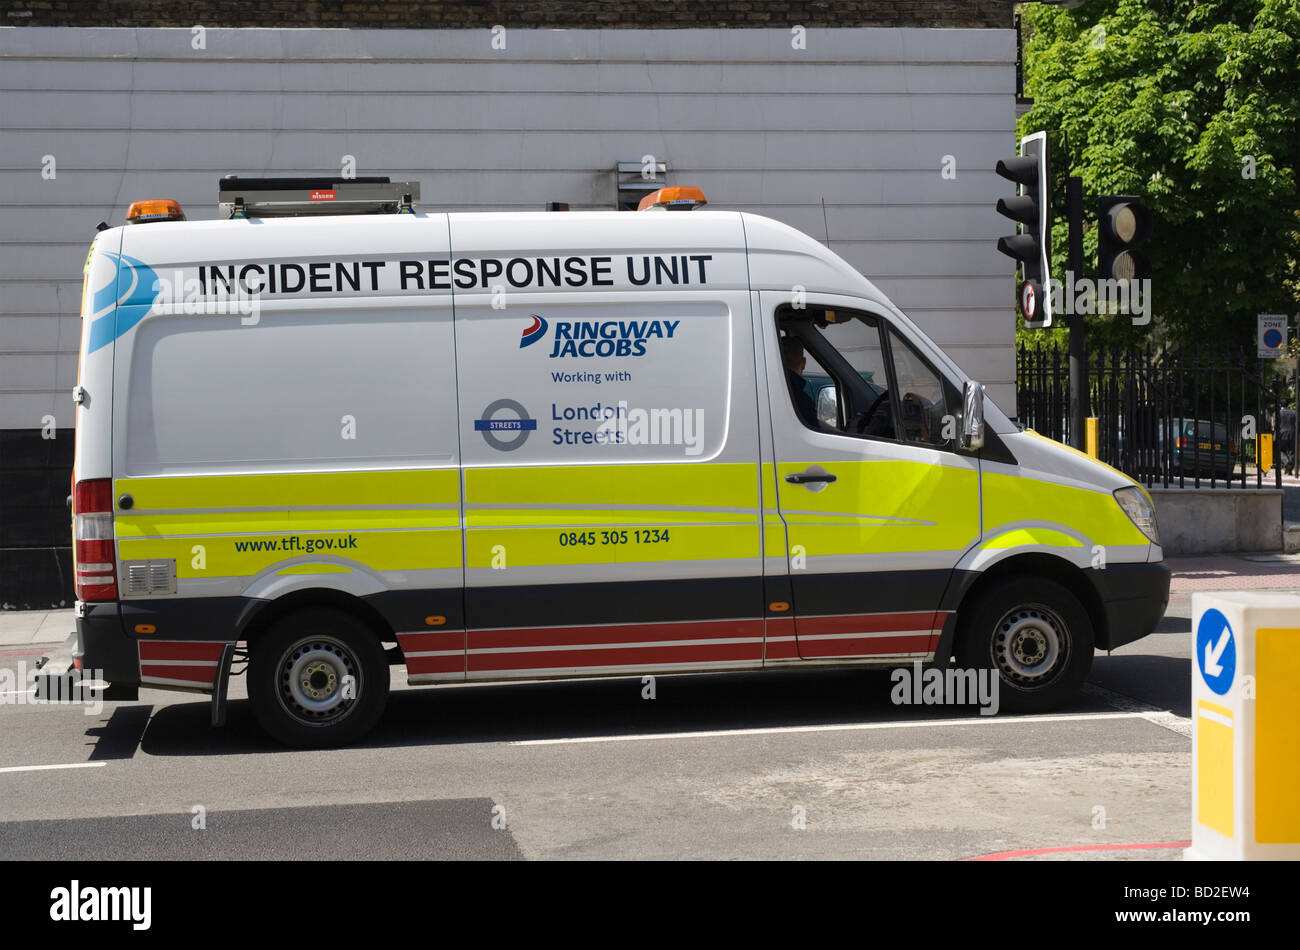 Incident Response Unit van, London, England, UK, Europe Stock Photo